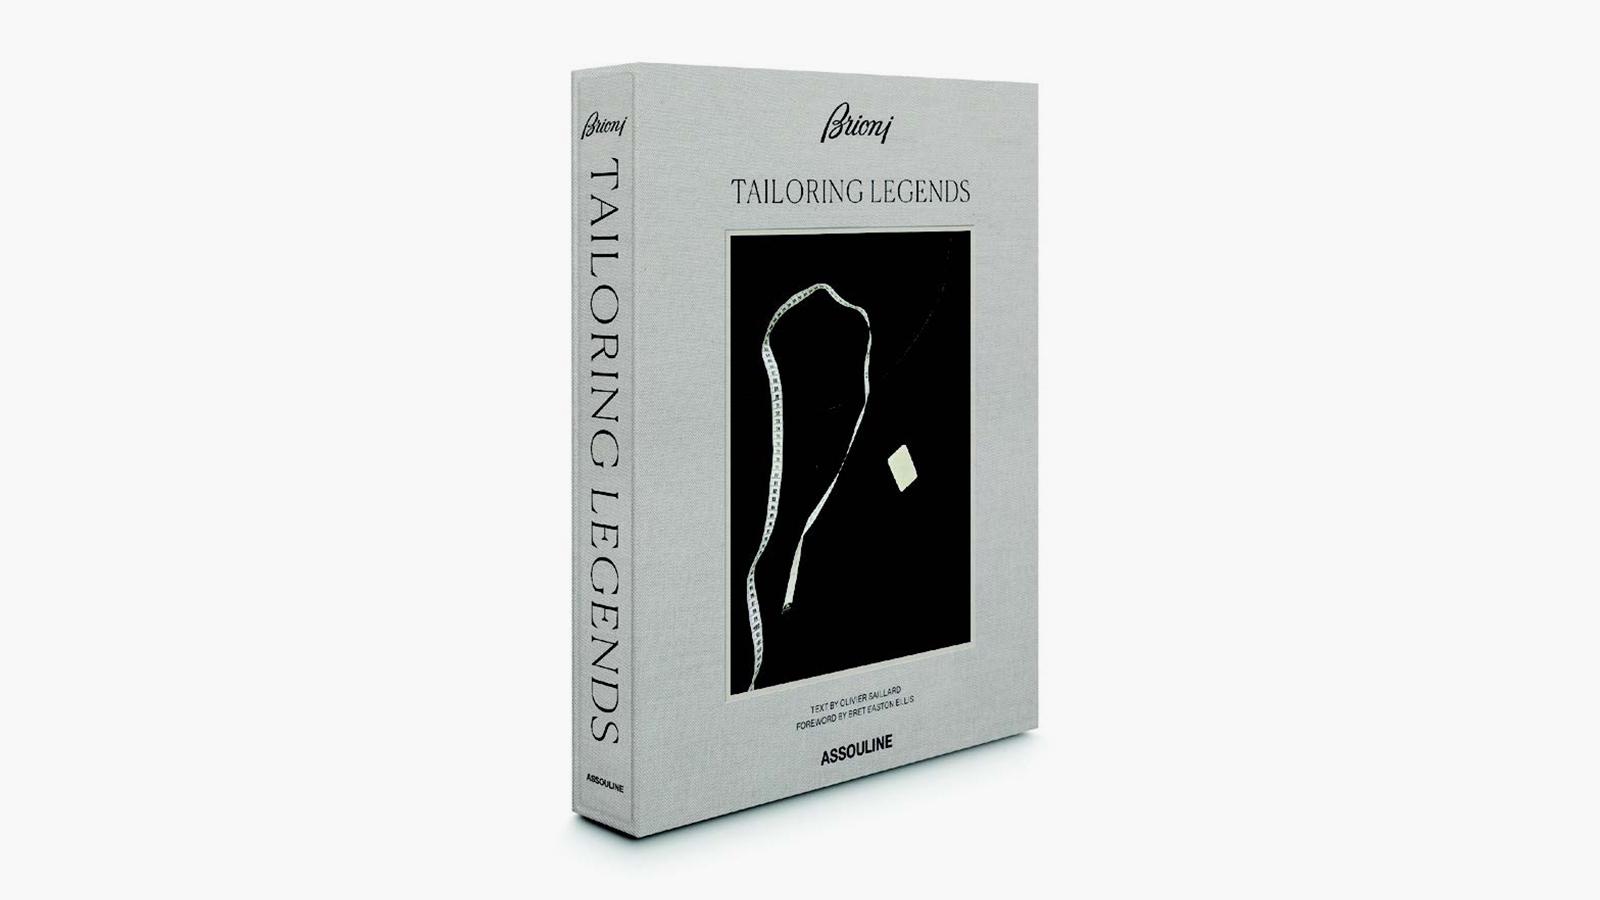 ‘Brioni: Tailoring Legends’ by Olivier Saillard & Bret Easton Ellis